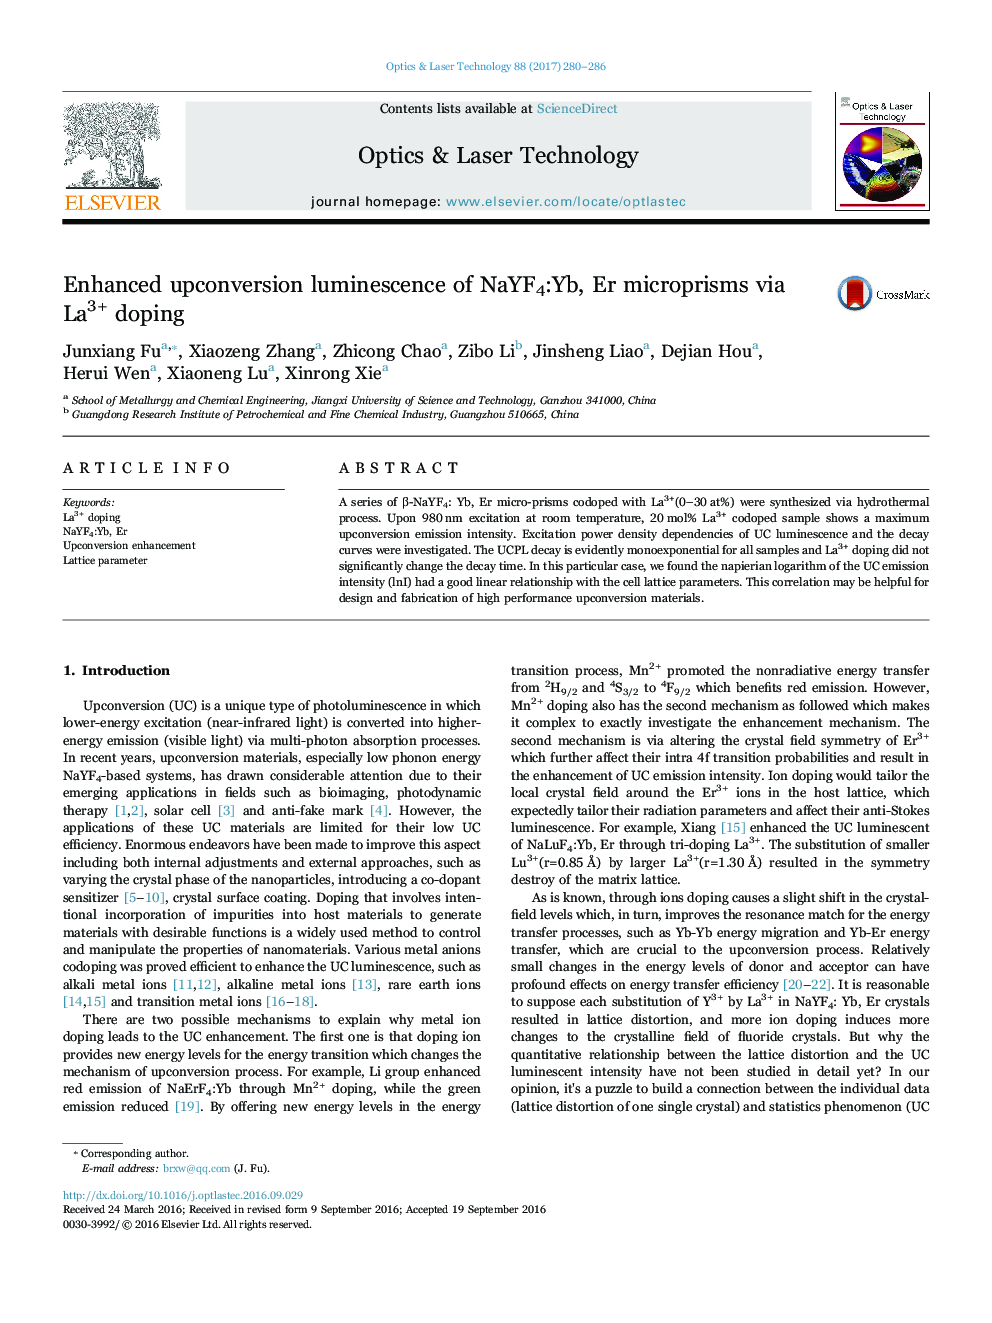 Enhanced upconversion luminescence of NaYF4:Yb, Er microprisms via La3+ doping